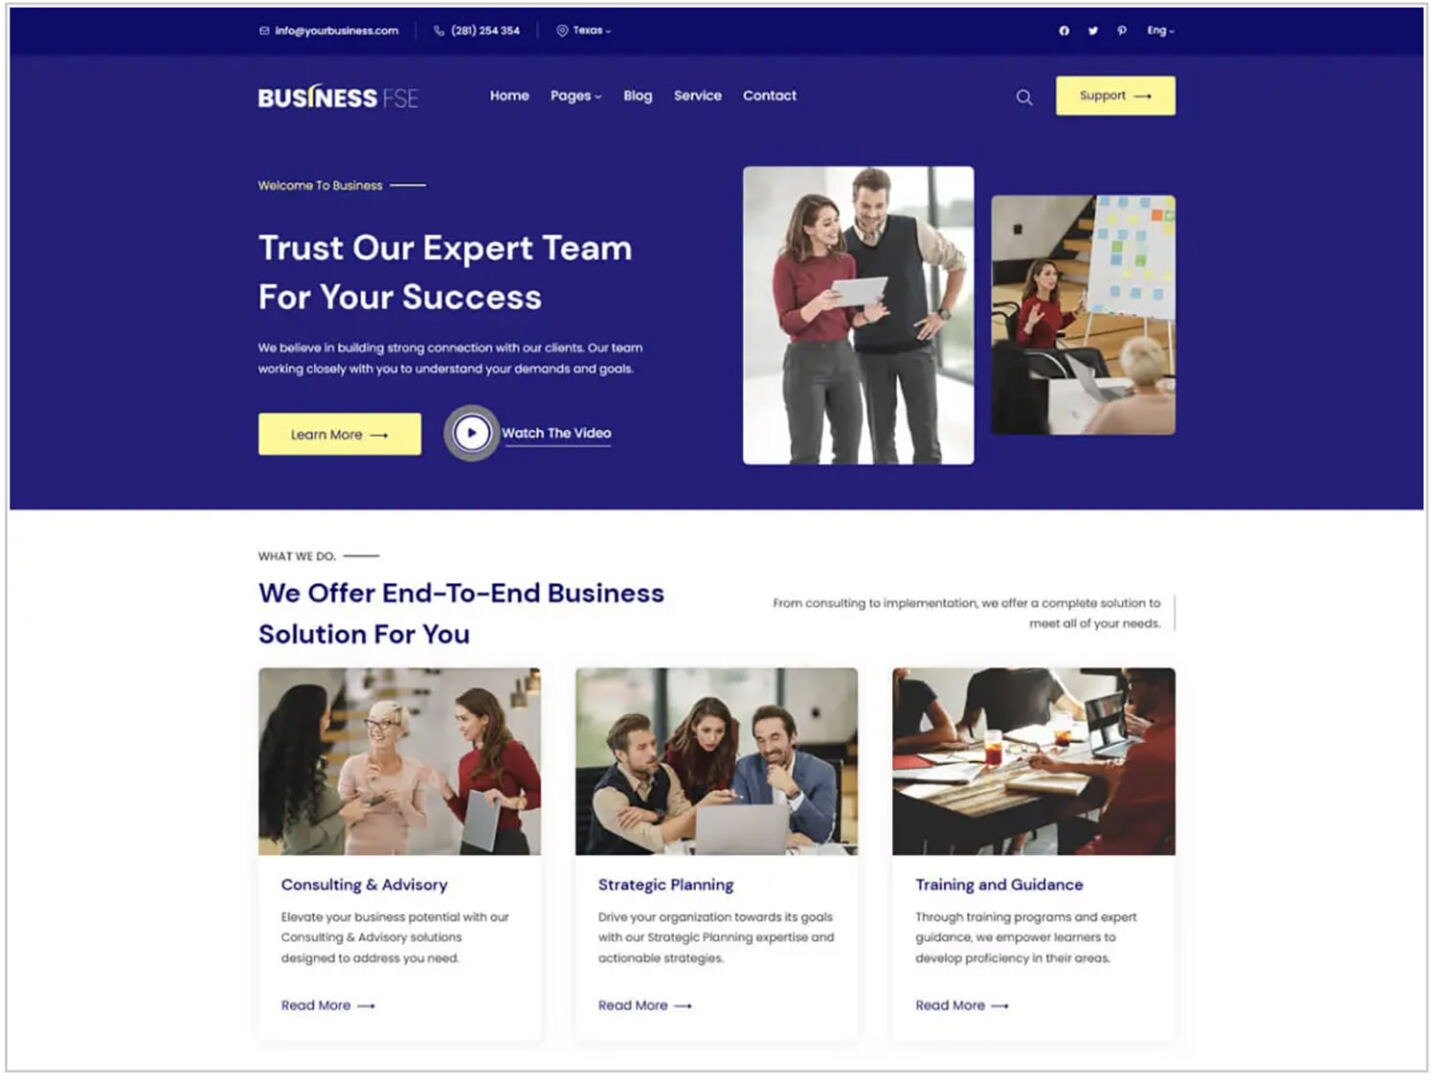 Business FSE WordPress Theme